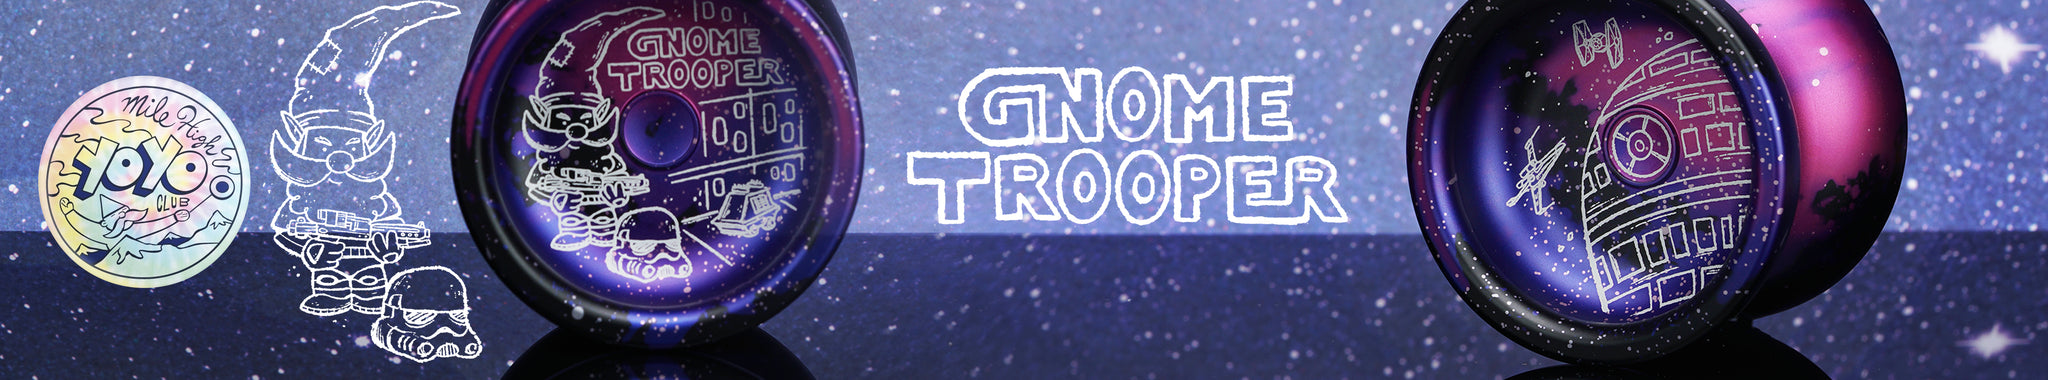 Gnome Trooper by Mile High YoYo Club